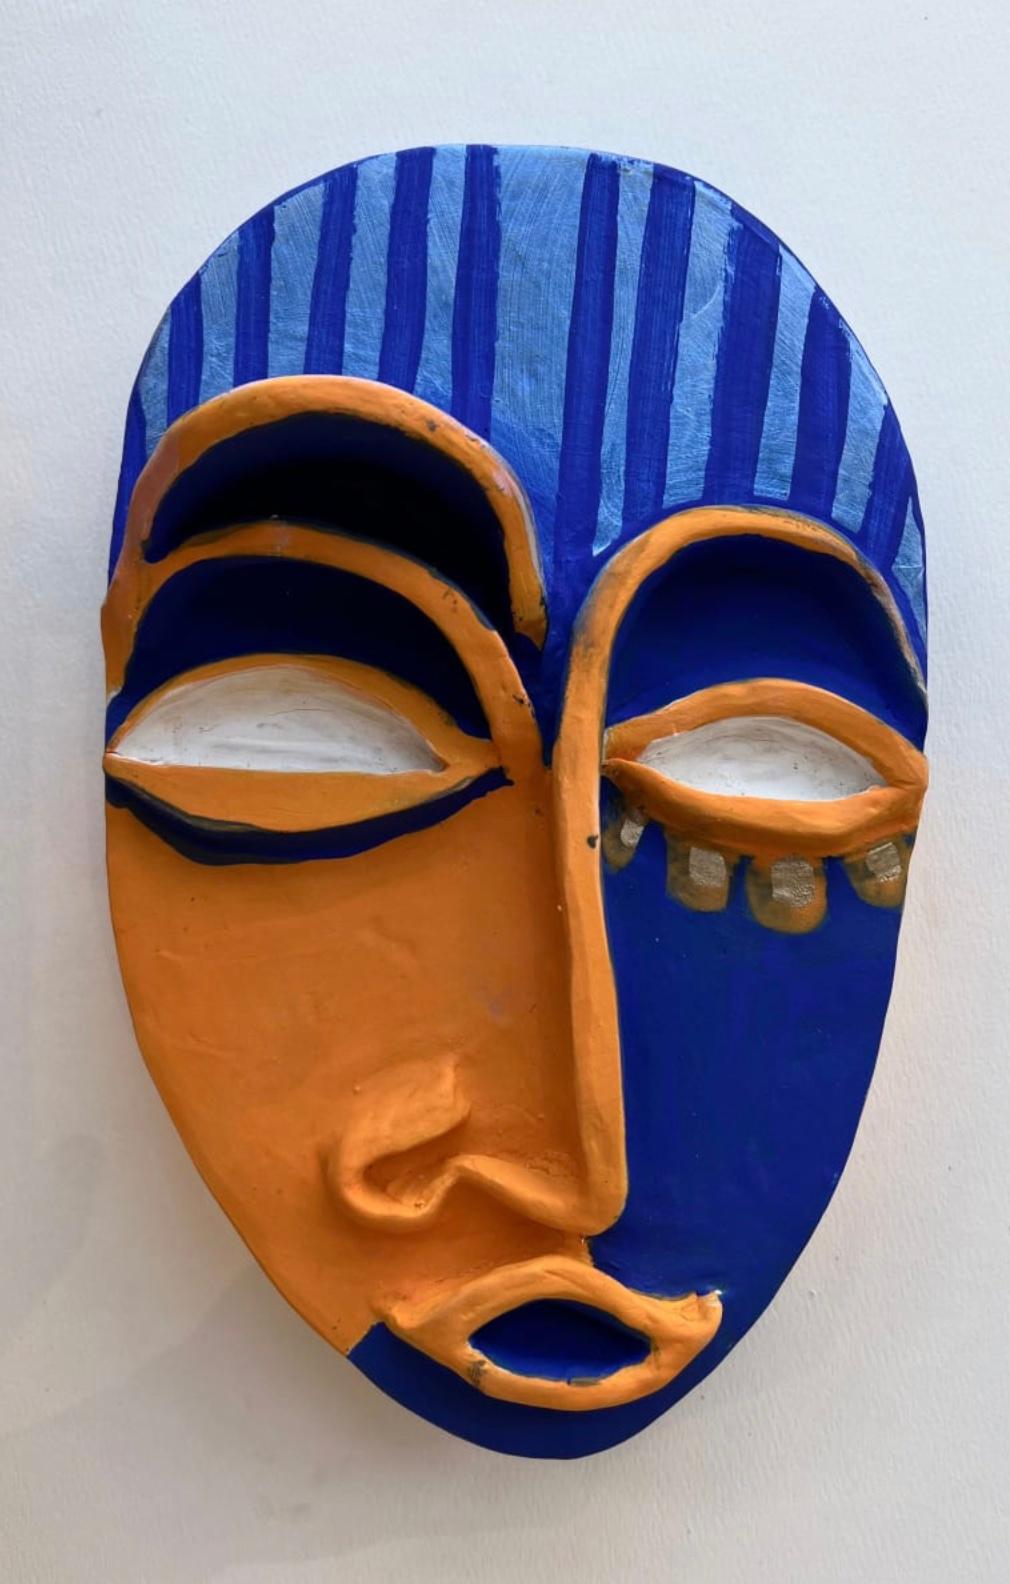 clay mask art